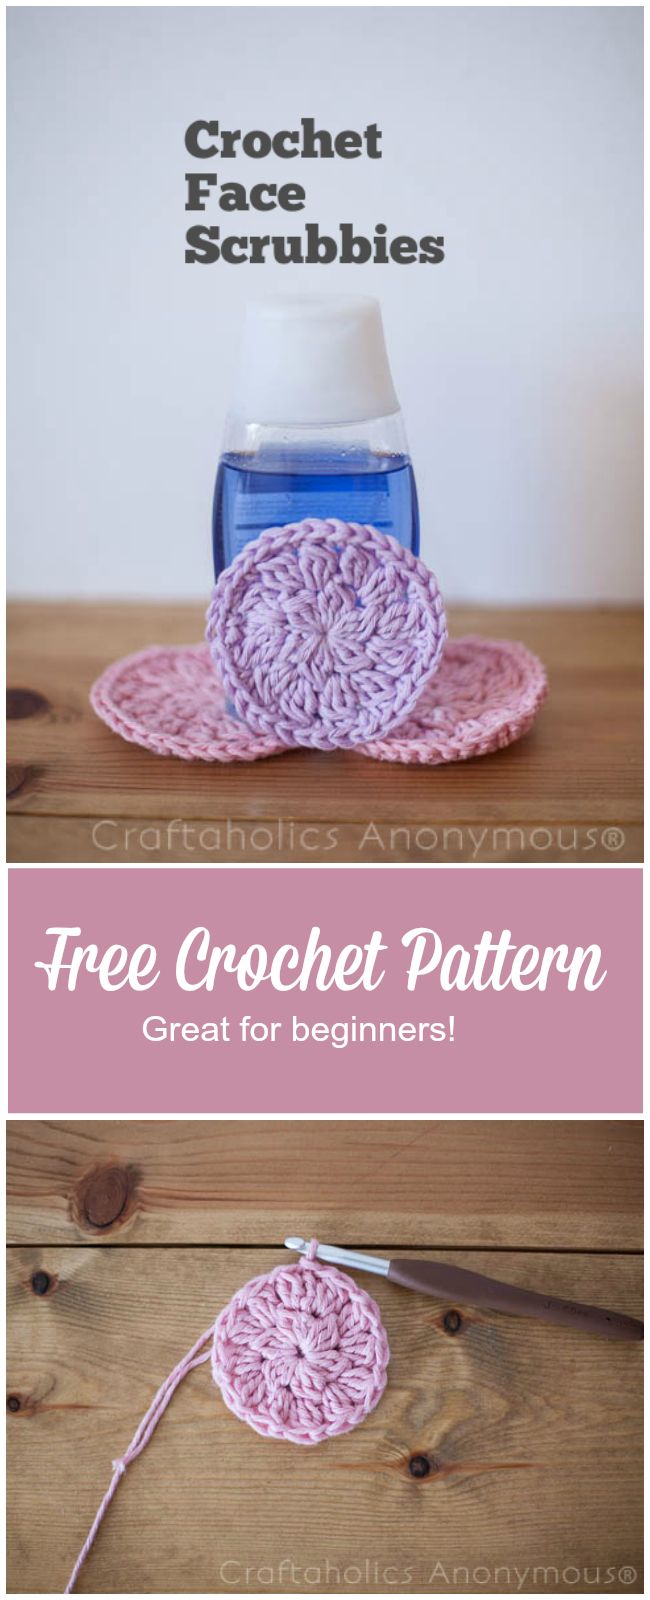 Crochet Face Scrubbies Tutorial